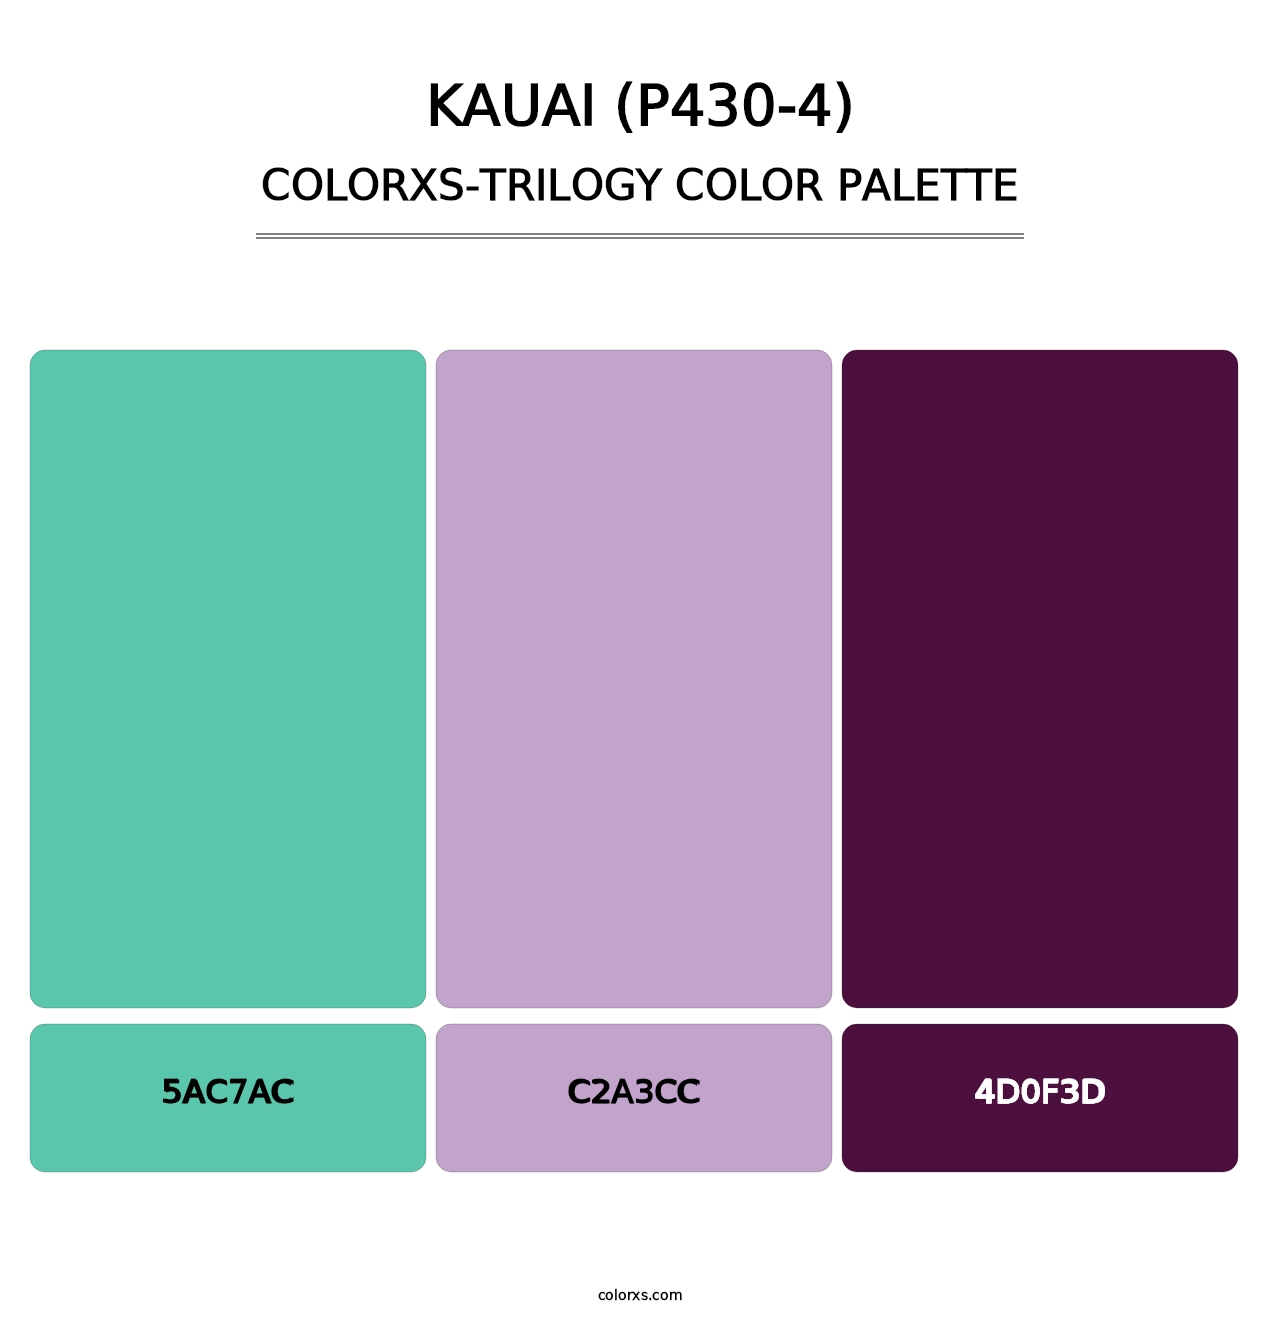 Kauai (P430-4) - Colorxs Trilogy Palette